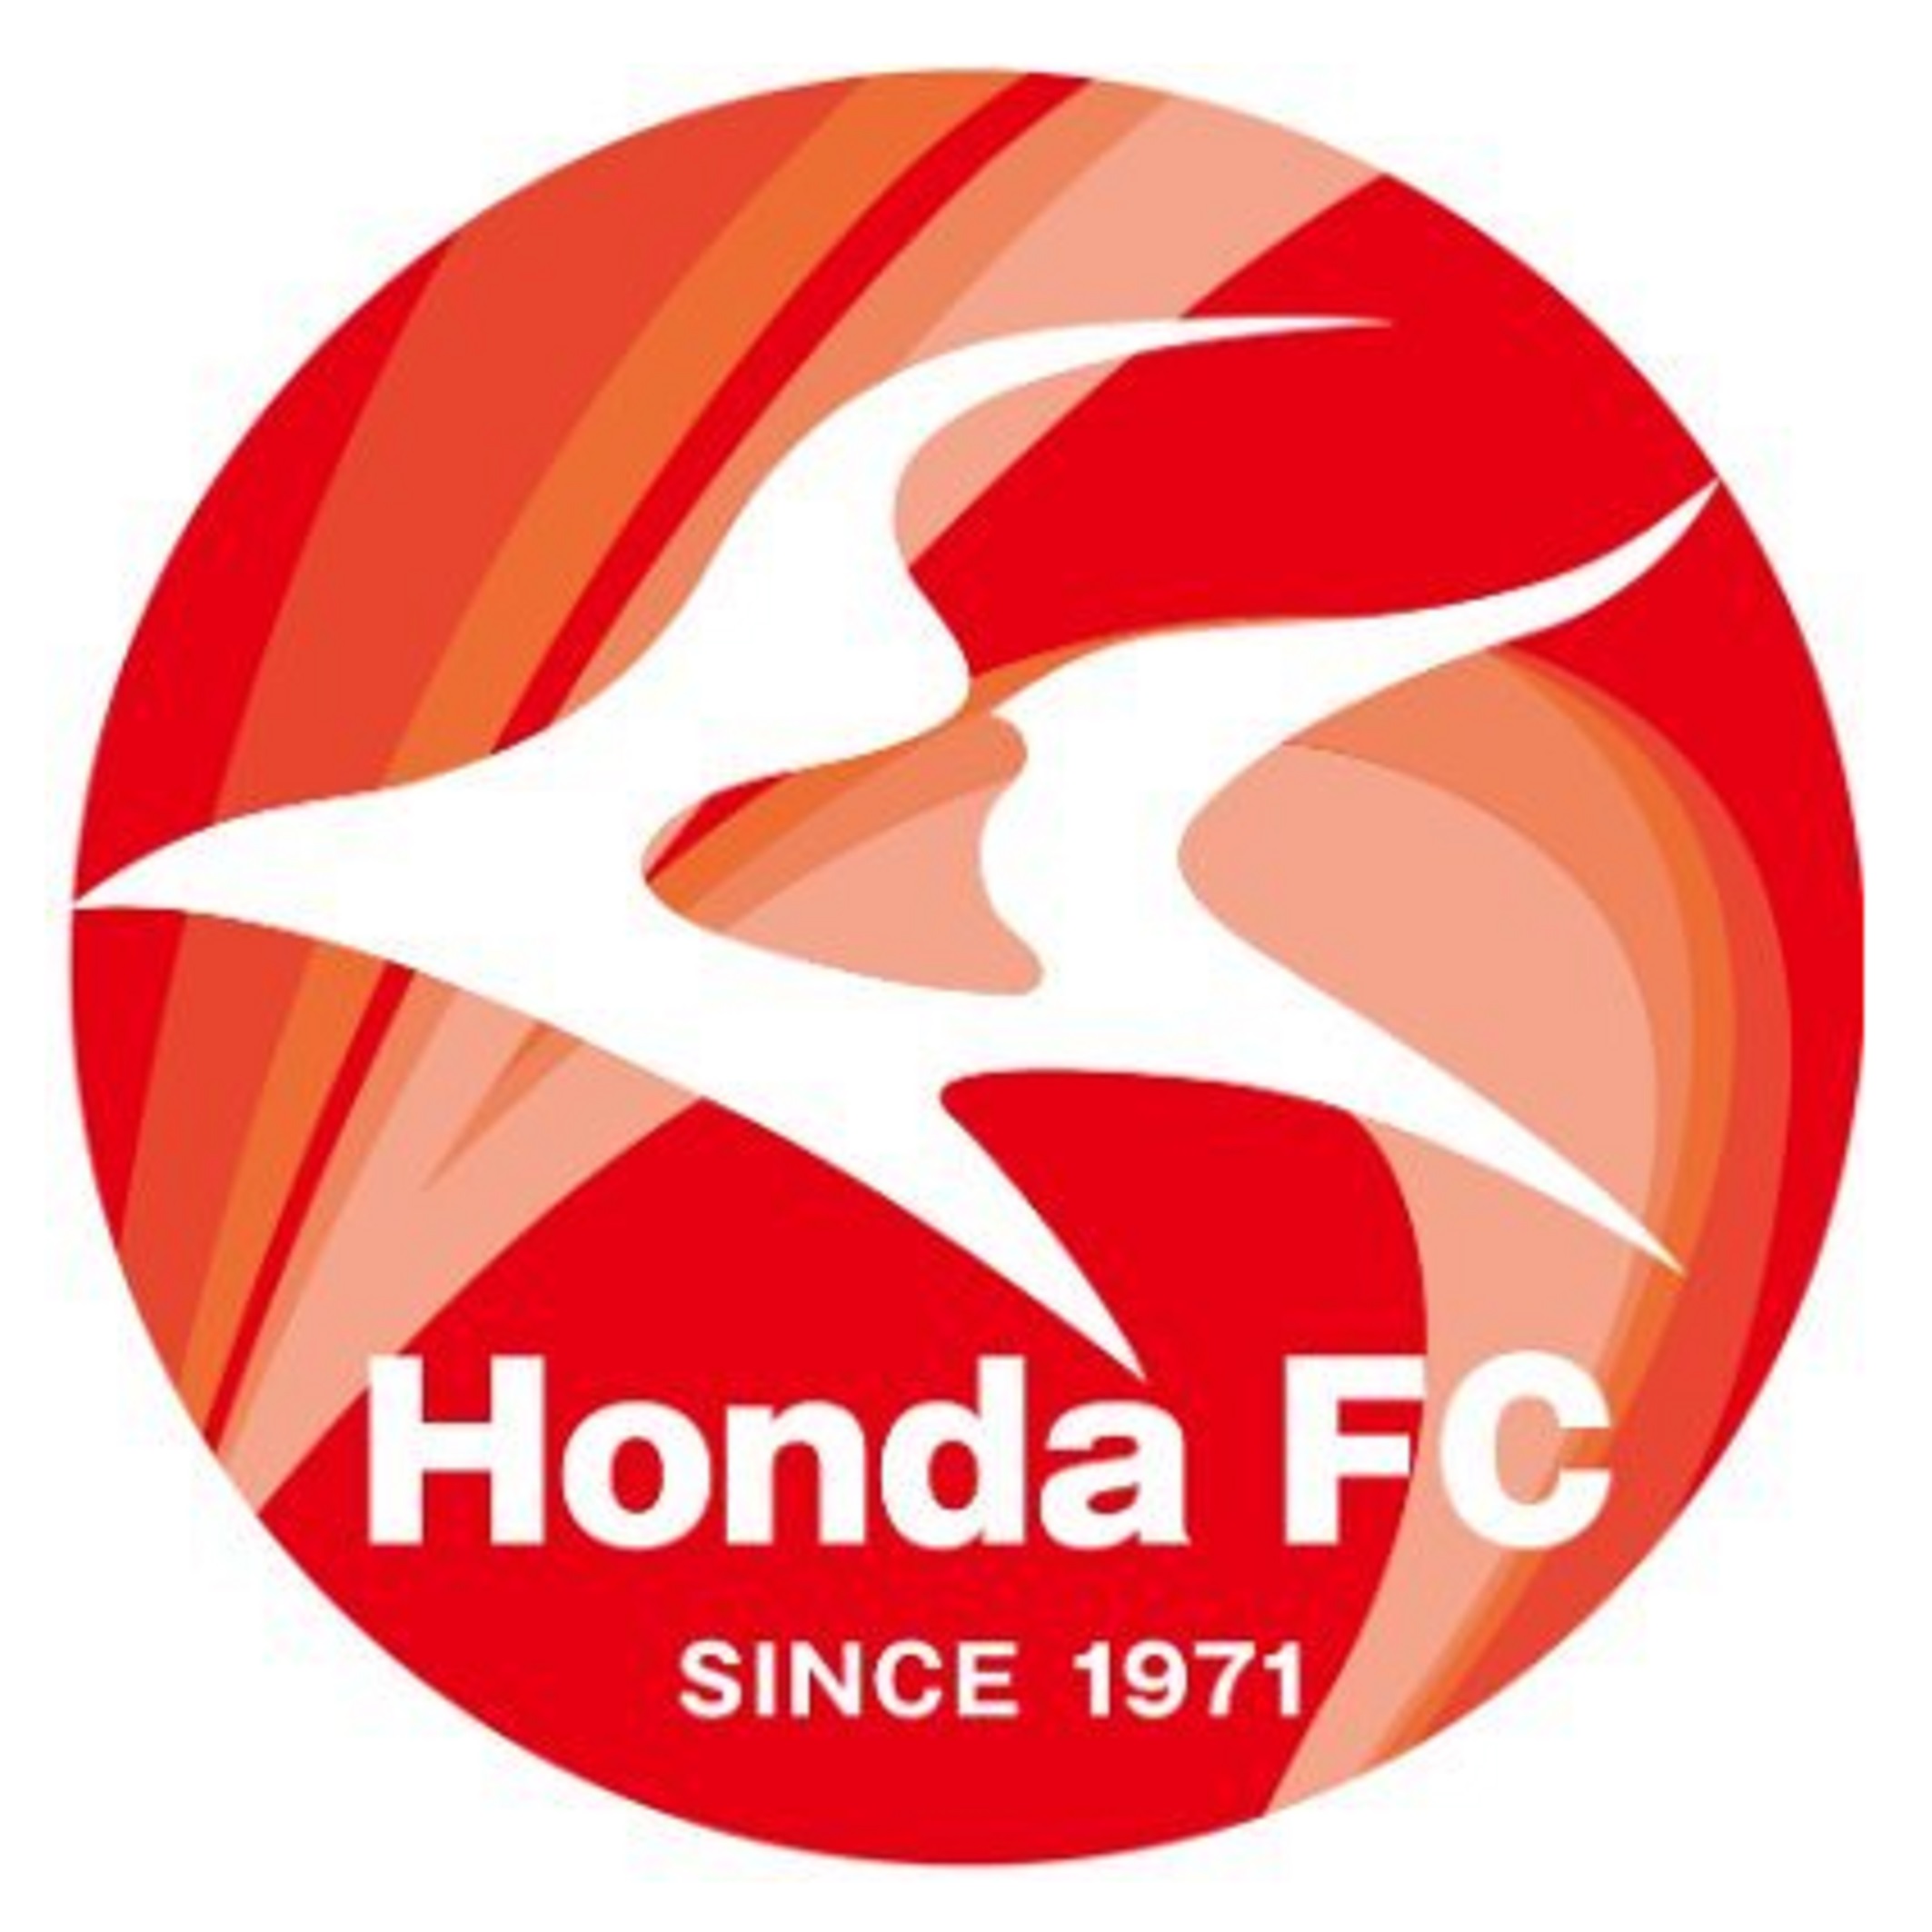 Honda Fc ホンダ ジュニアユース セレクション 11 14 28 12 12開催 22年度 静岡 ジュニアサッカーnews